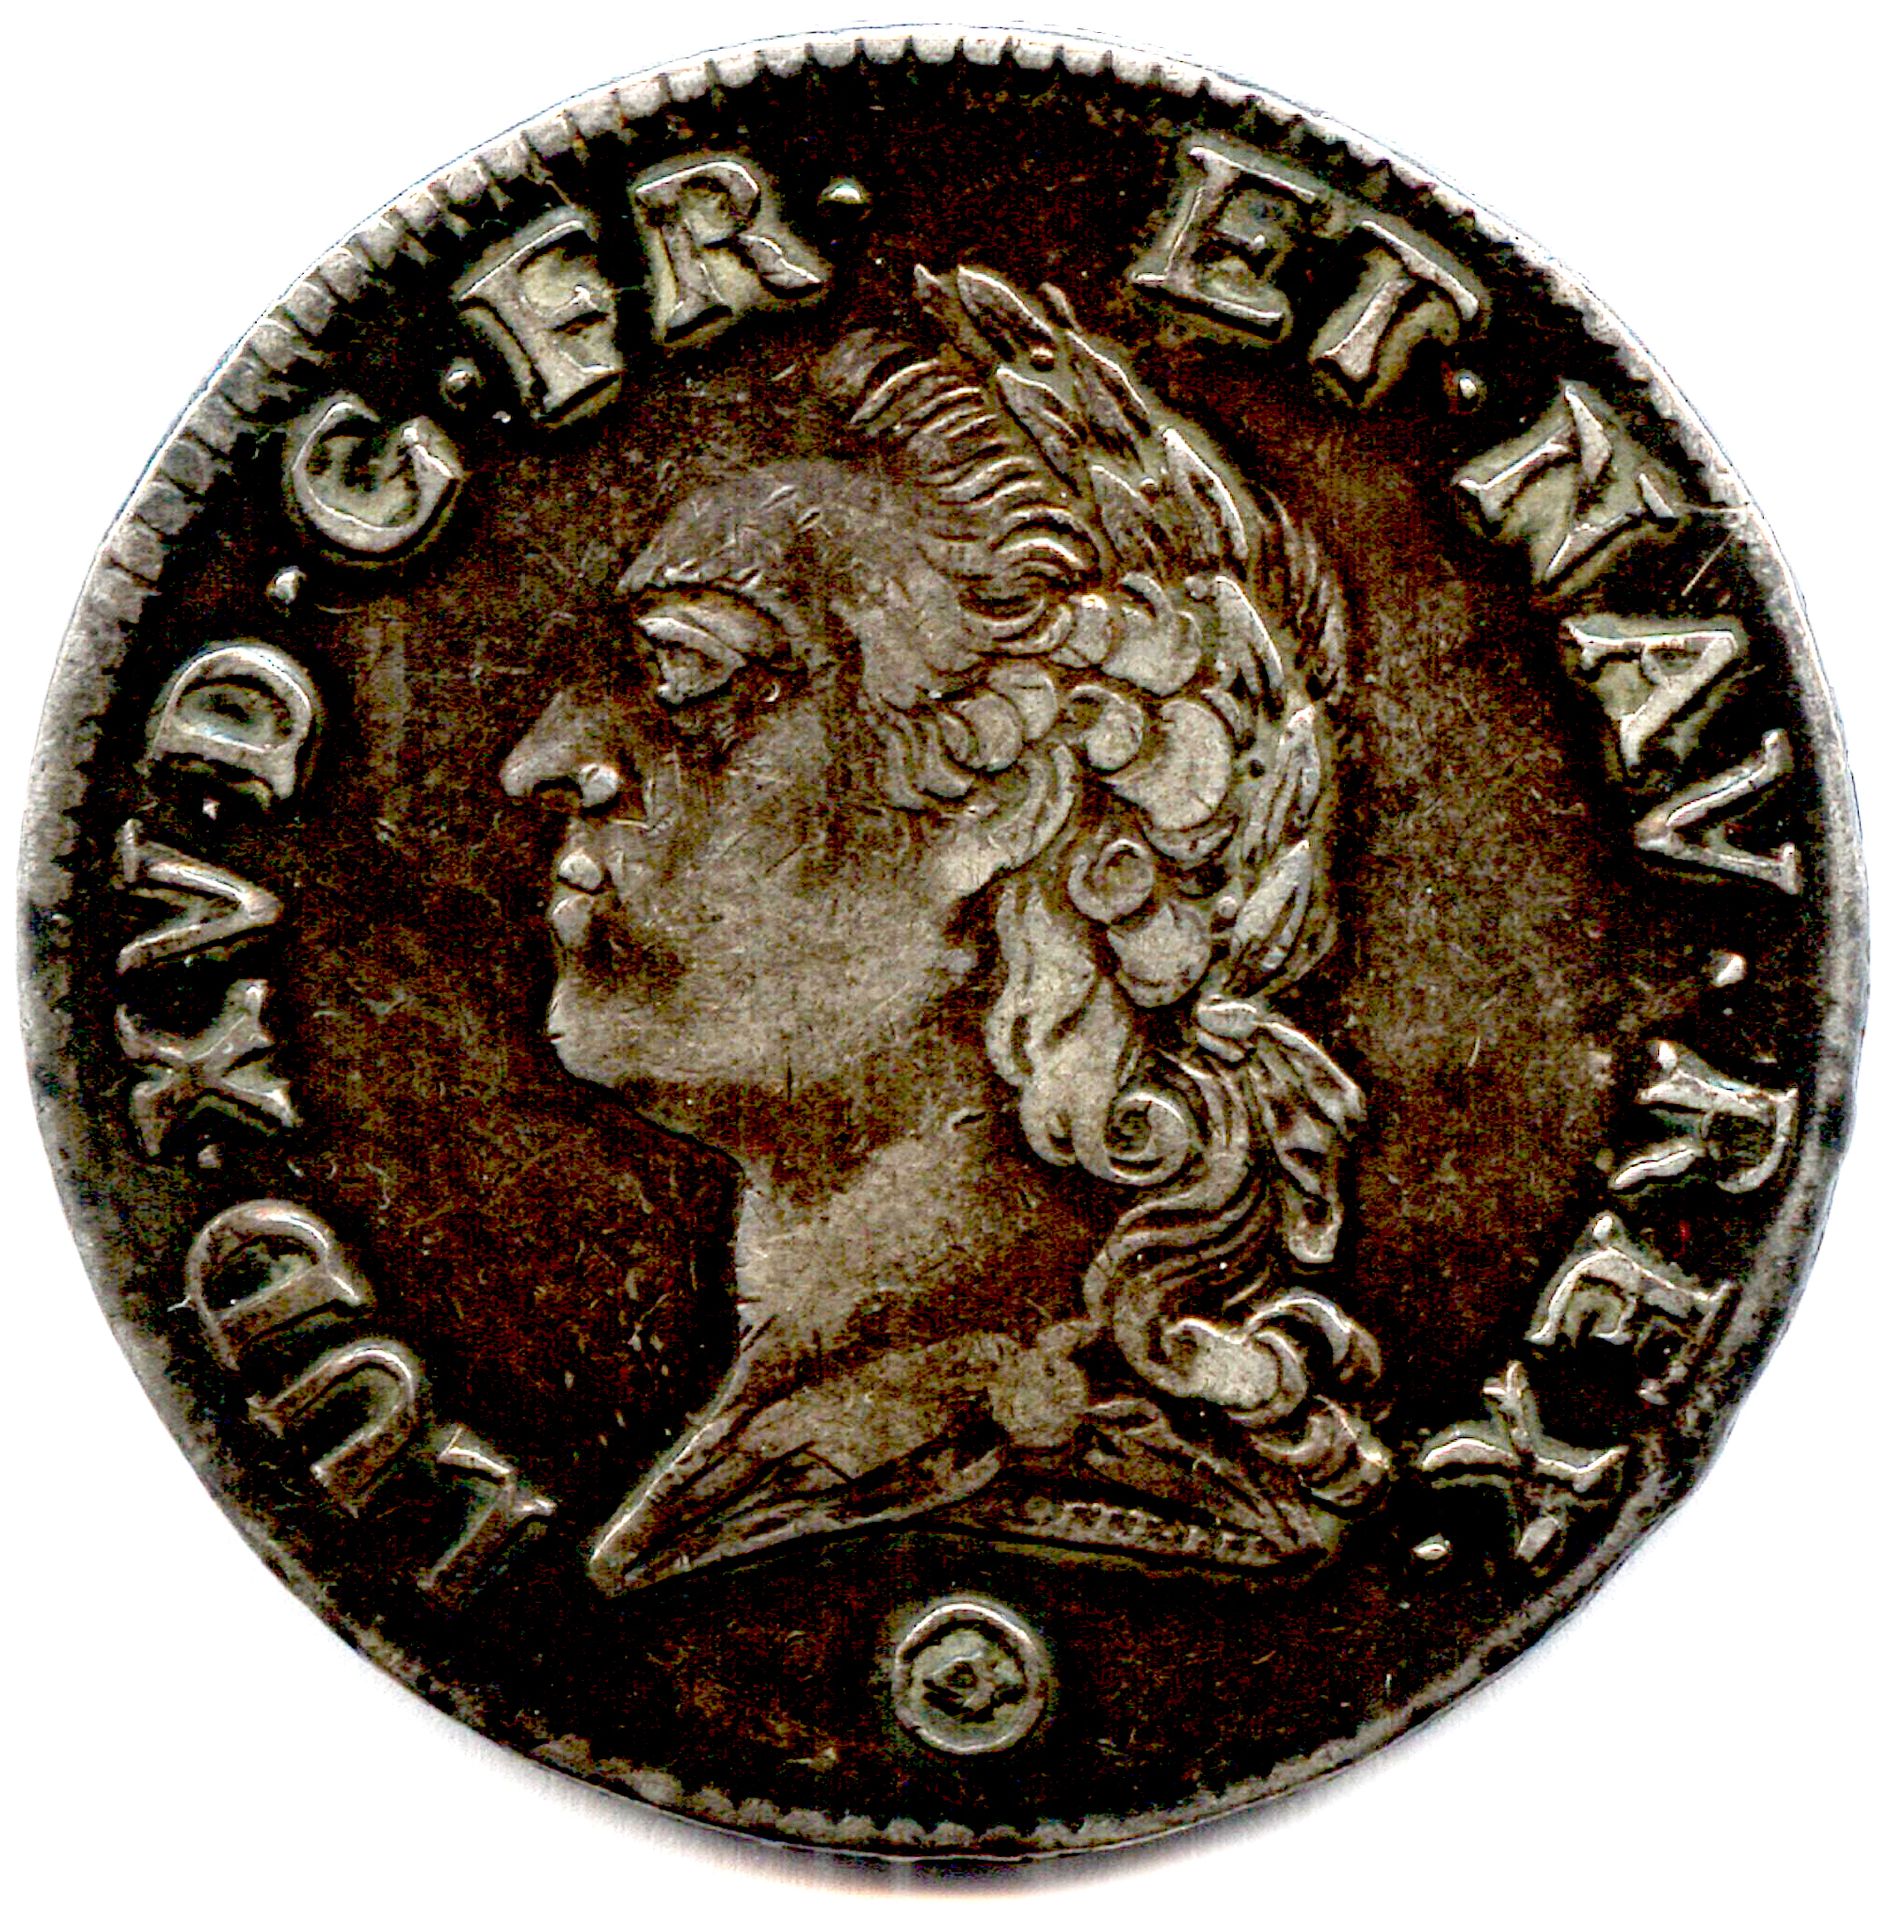 Null 路易十五 1715-1774

盾牌上的旧头像1773年Q=佩皮尼昂。

(29,12 g) Gad 323

背面卷轴上的原始条纹。

黑色古铜色。&hellip;